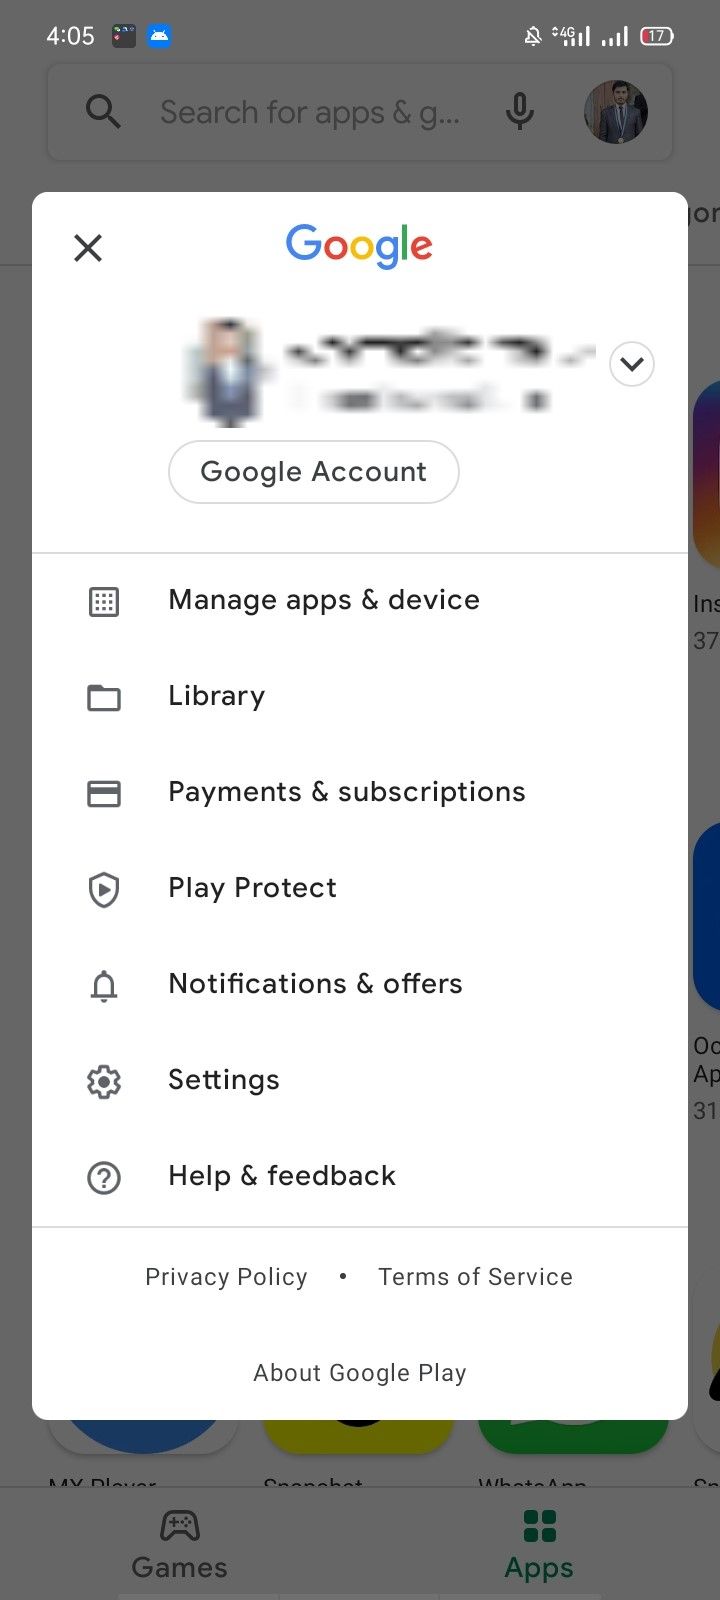 Google-Account-Menu-In-Google-Play-Store-1